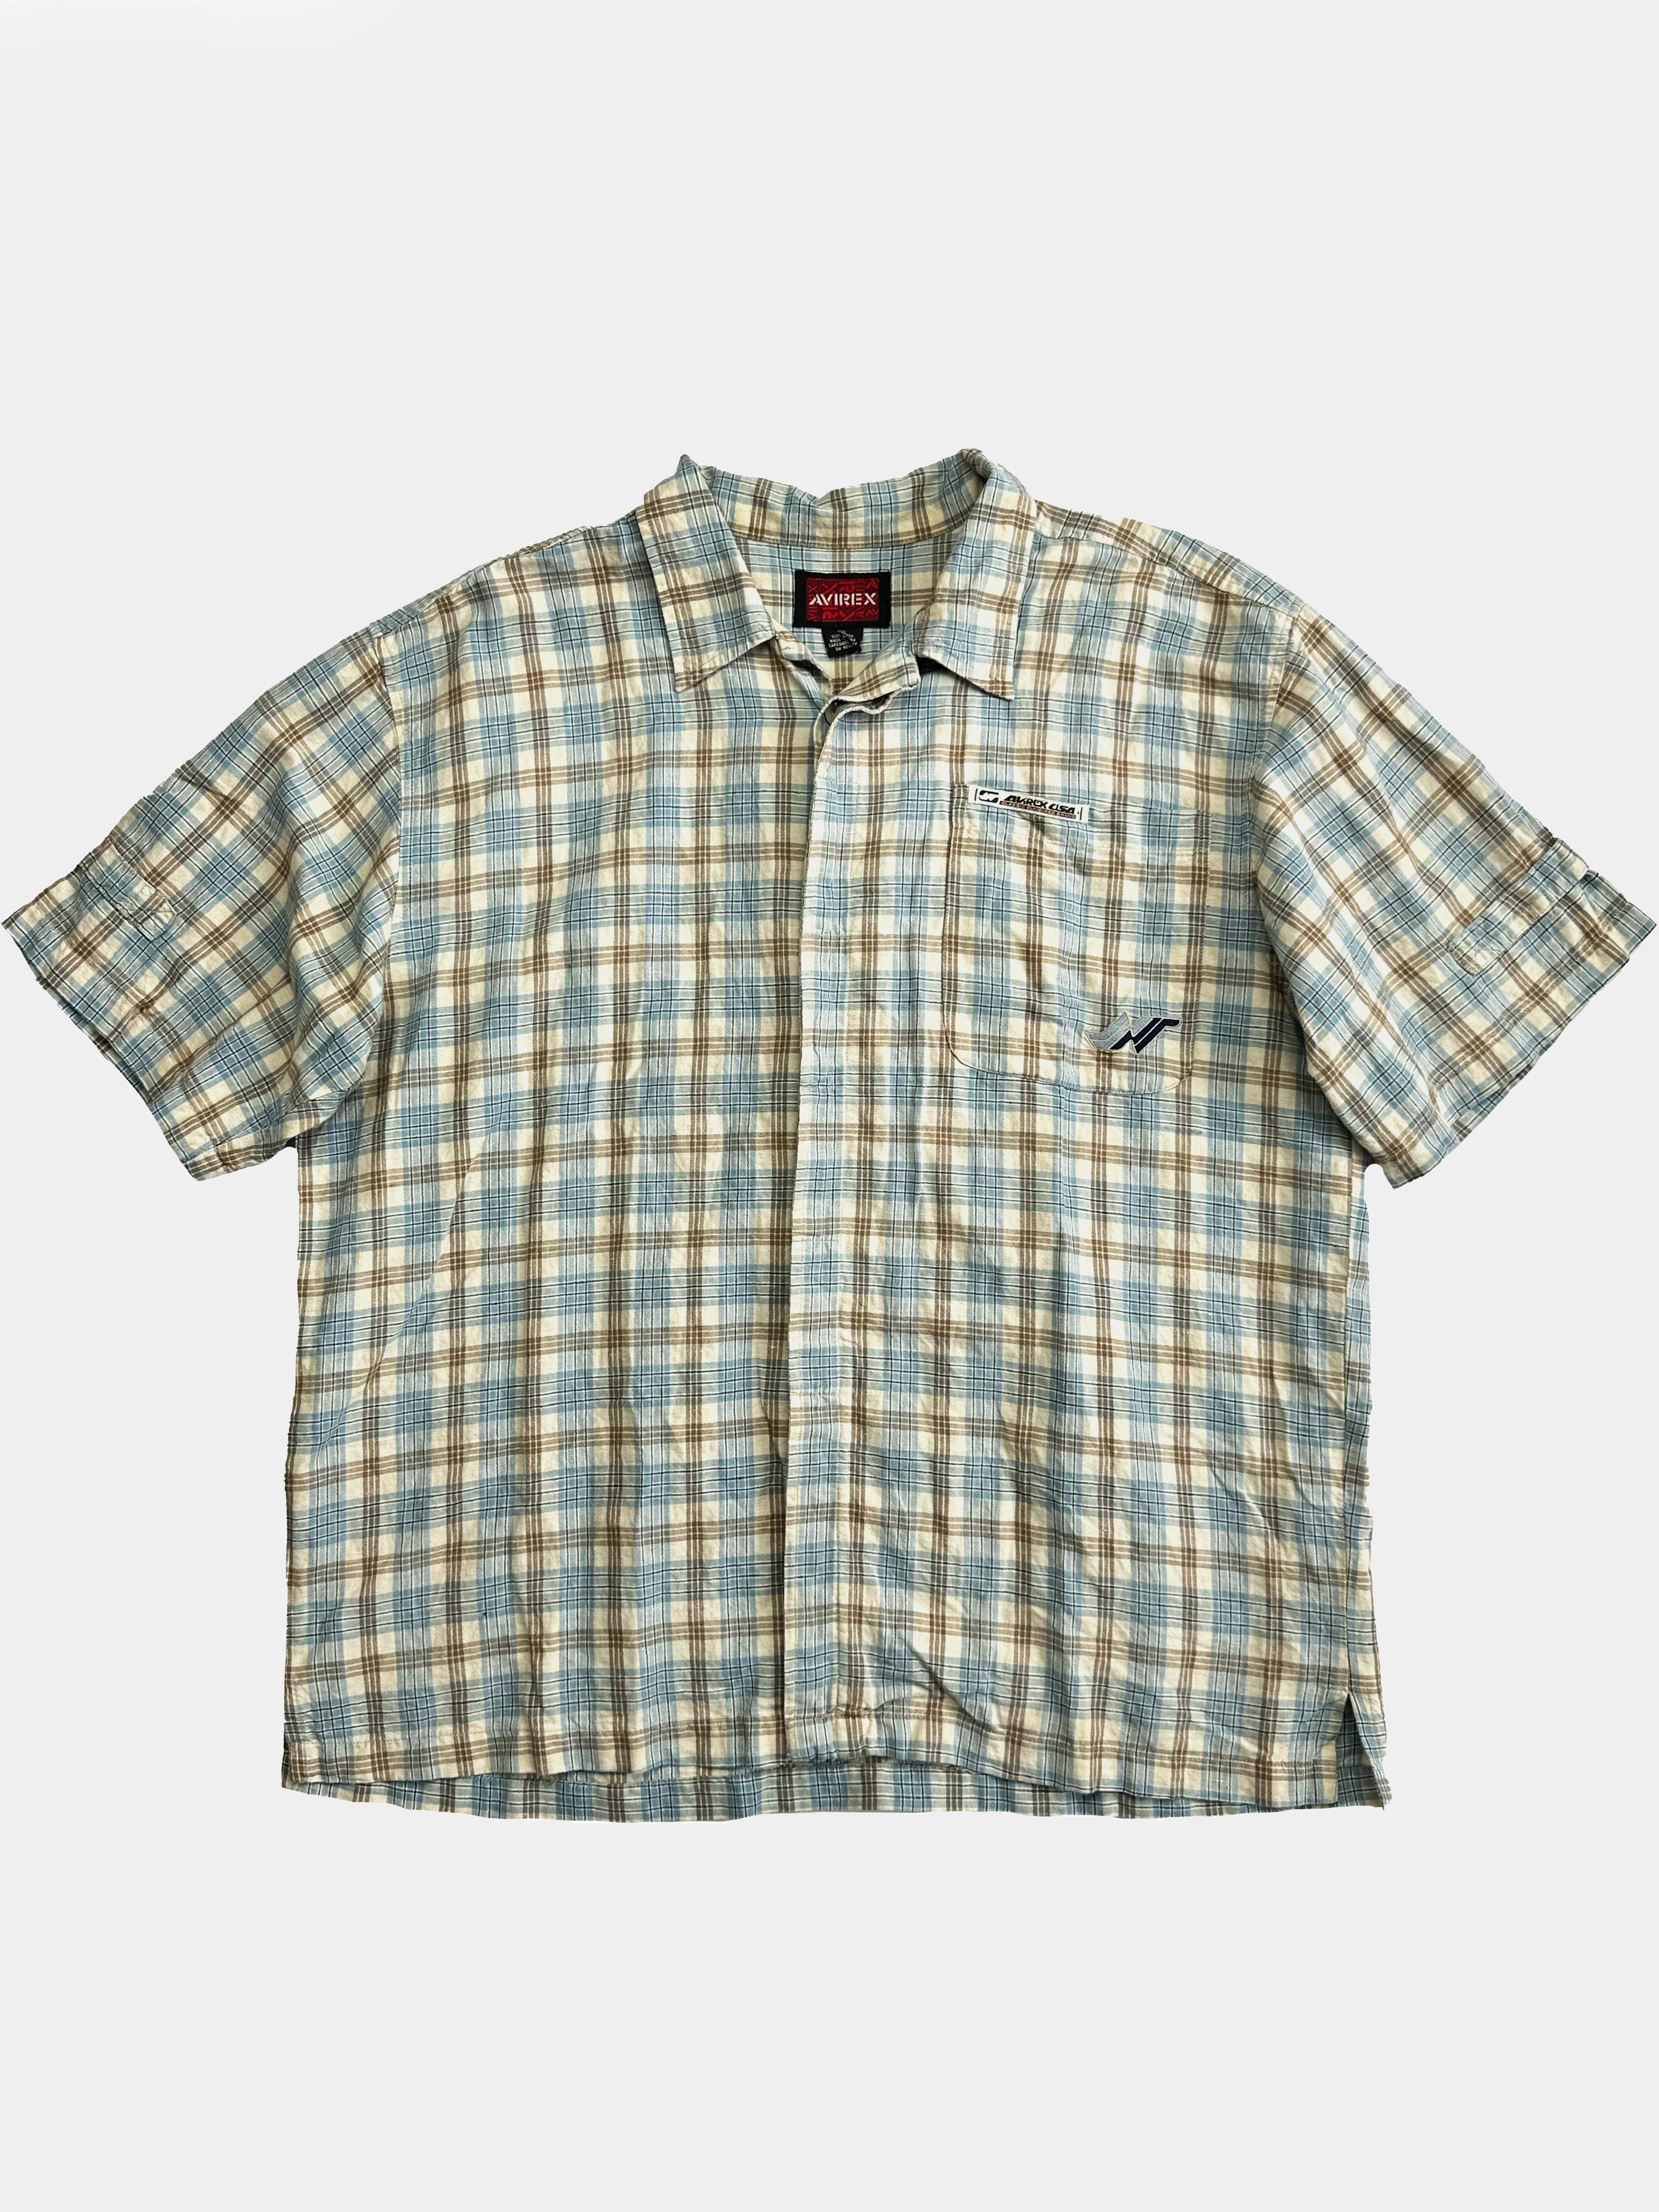 Avirex Flannel Shirt 90's